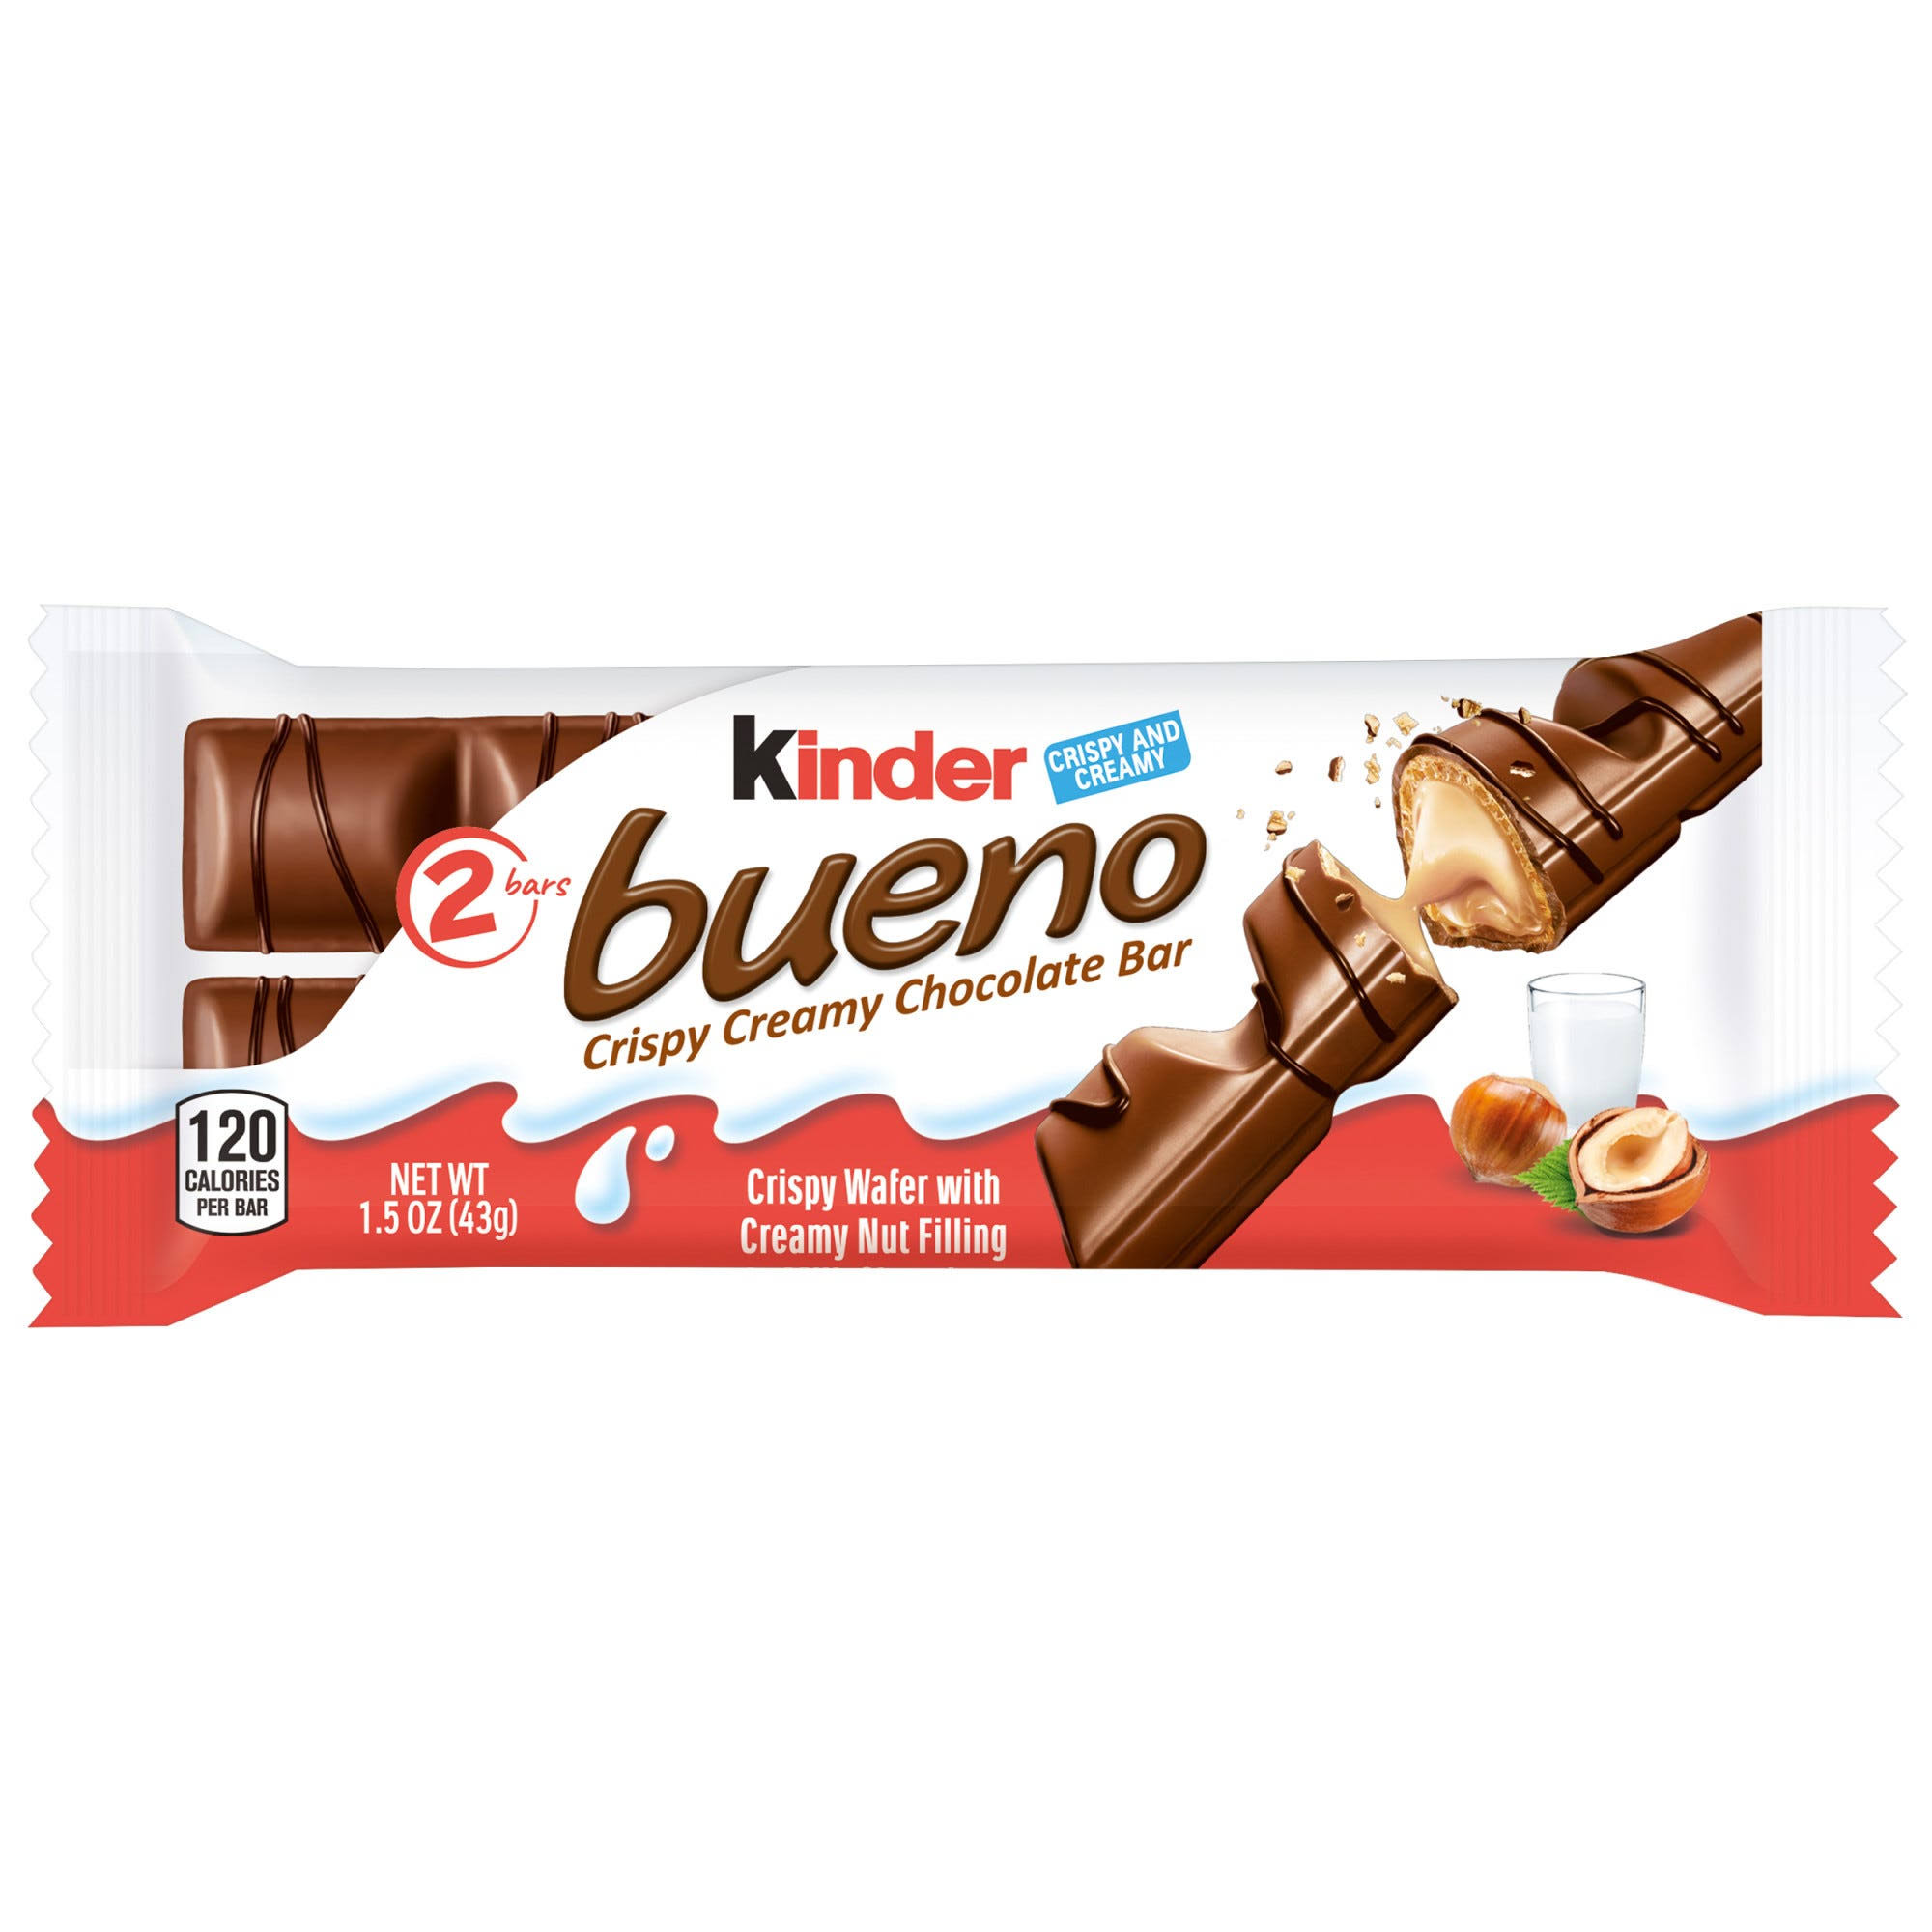 Kinder bueno milk chocolate and hazelnut cream candy bar pack, 1.5 oz